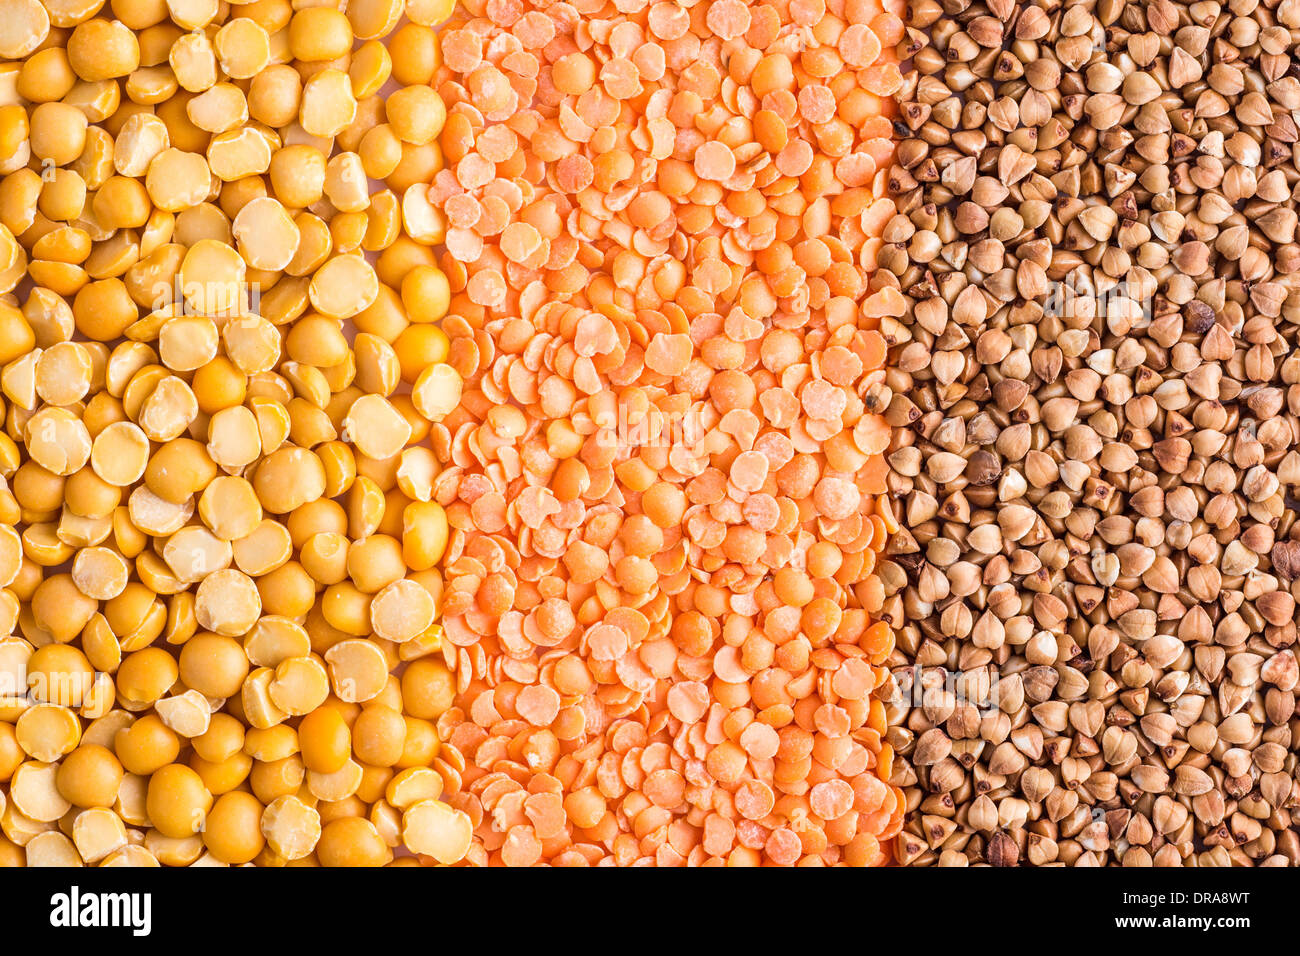 Shredded peas, lentils and buckwheat background Stock Photo